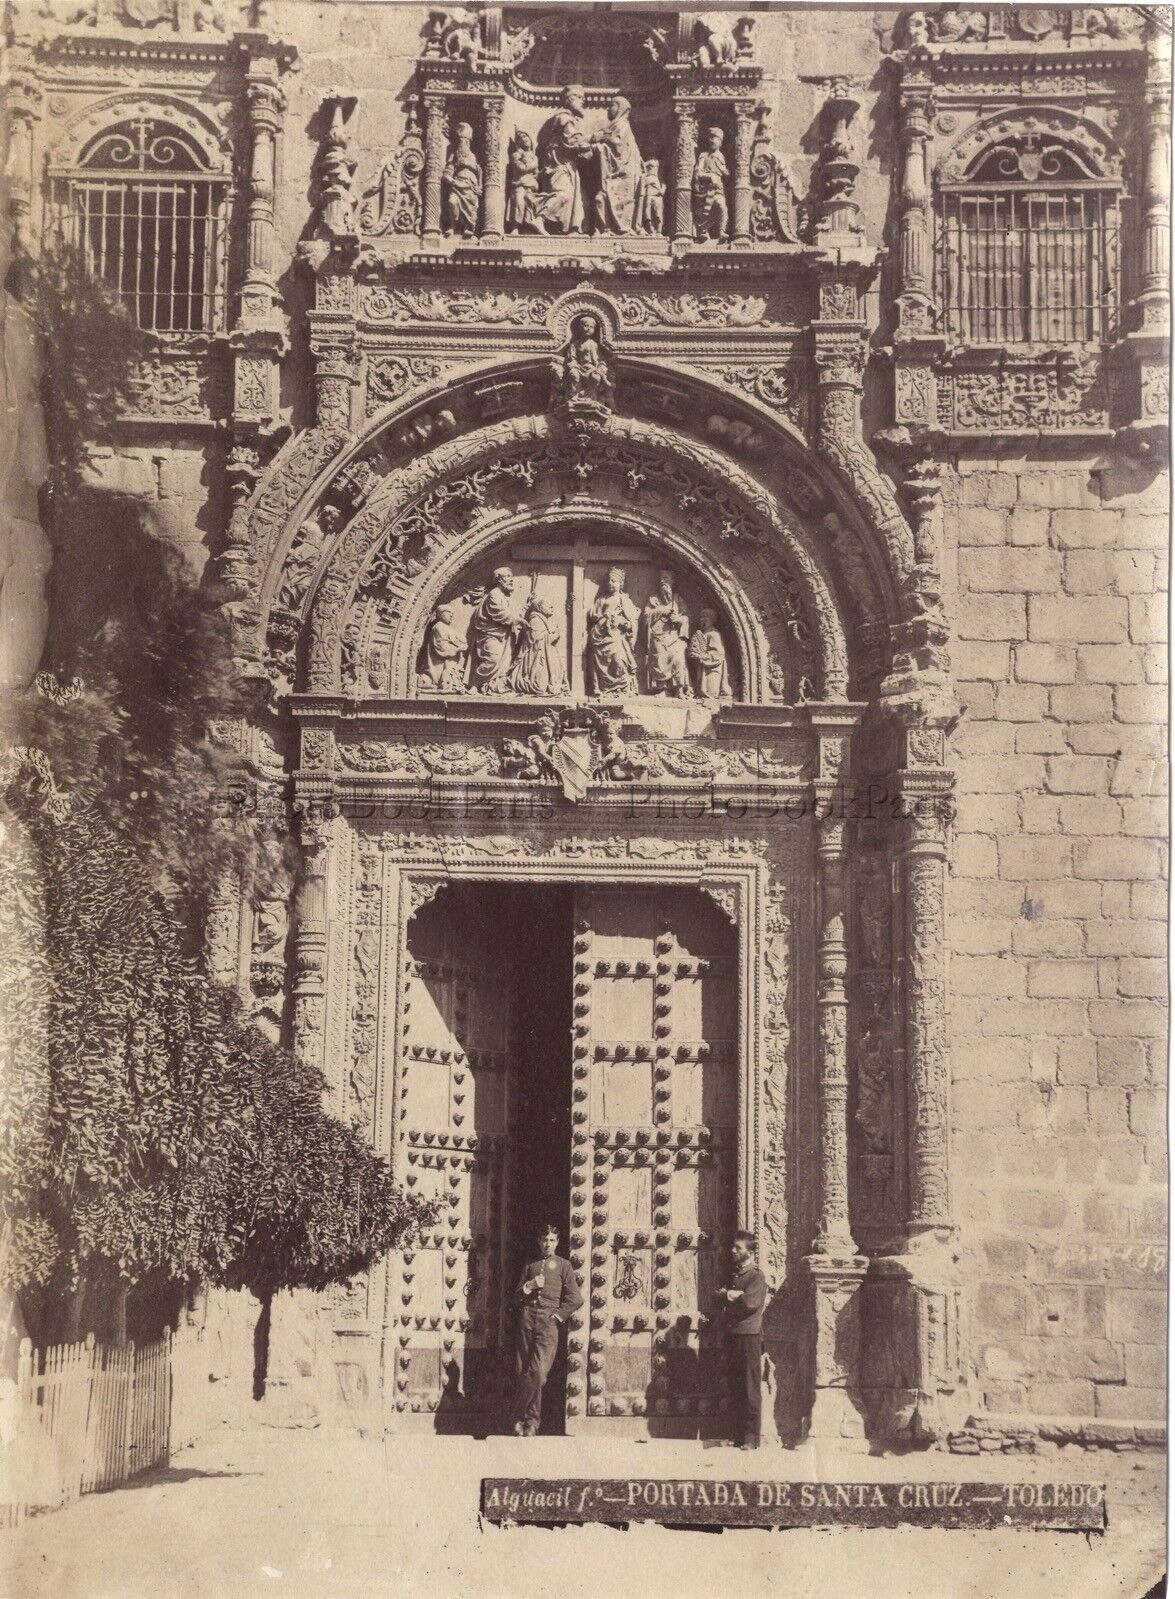 Portada de Santa Cruz Toledo Spain Photo Casiano Alguacil Vintage Albumin 